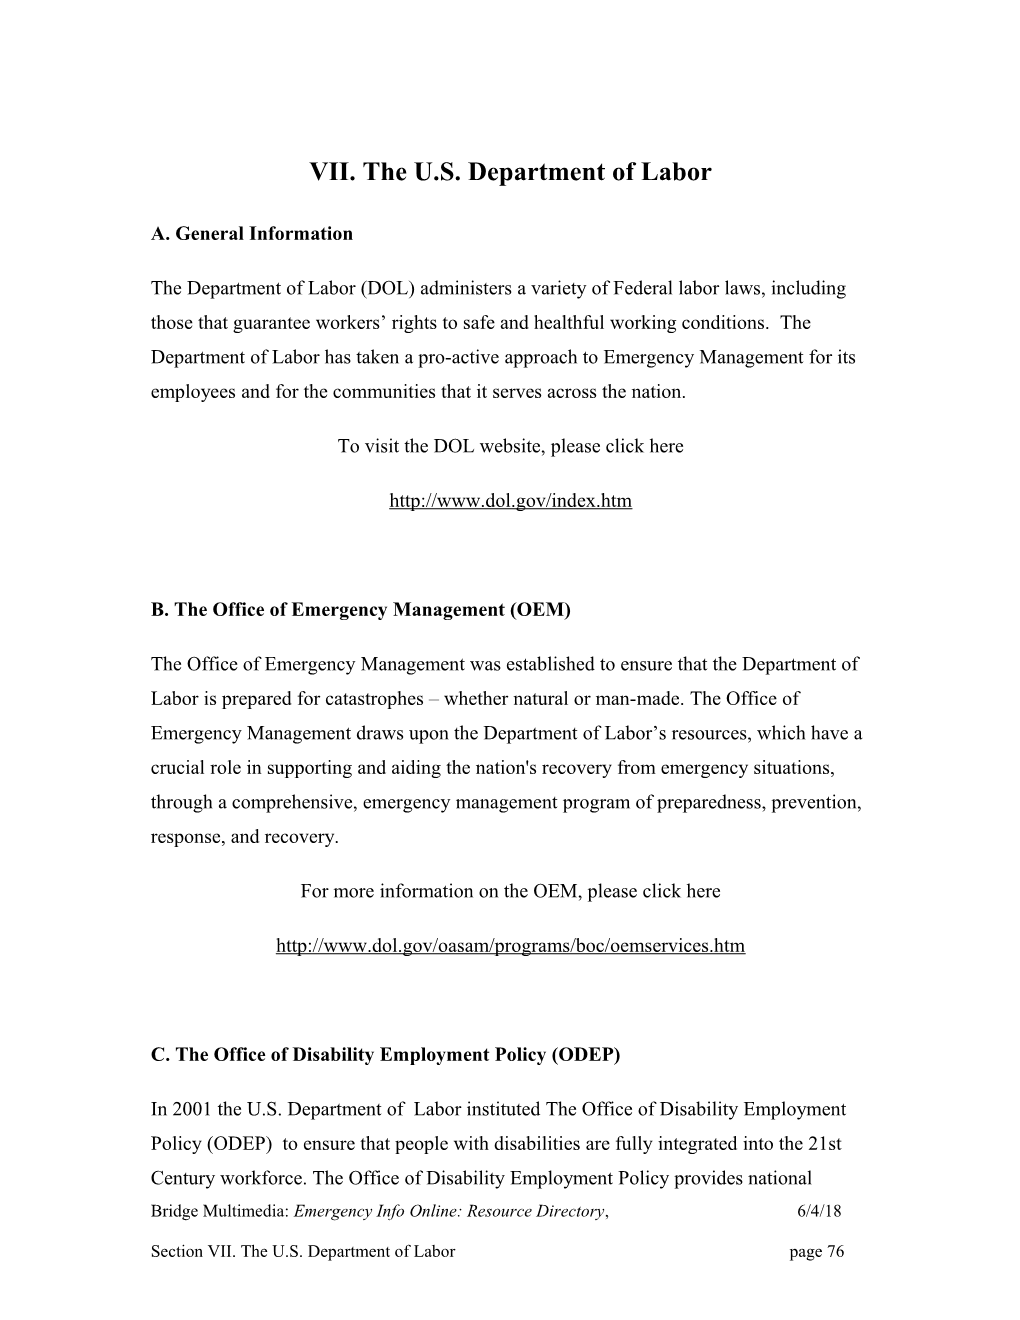 VII. the U.S. Department of Labor